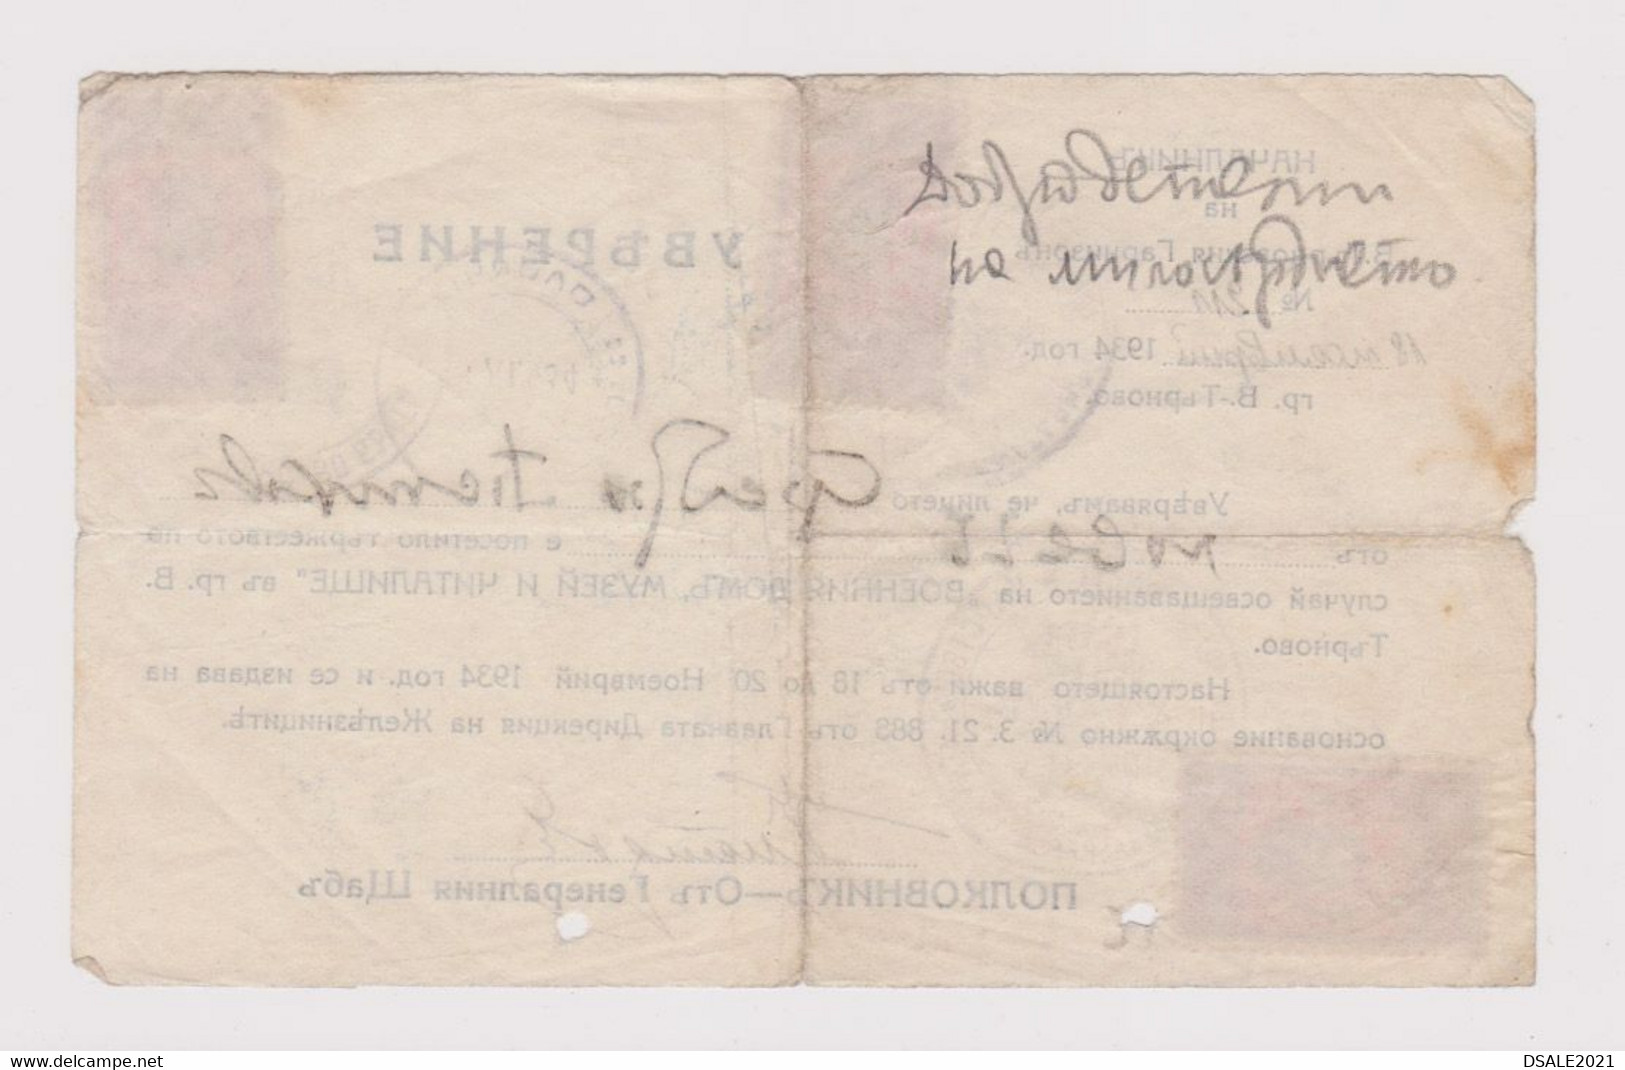 Bulgaria Bulgarian Bulgarie Bulgarije 1934 Military Permit Railway Ticket W/3x1Lv. Fiscal Revenue Stamp (m368) - Timbres De Service